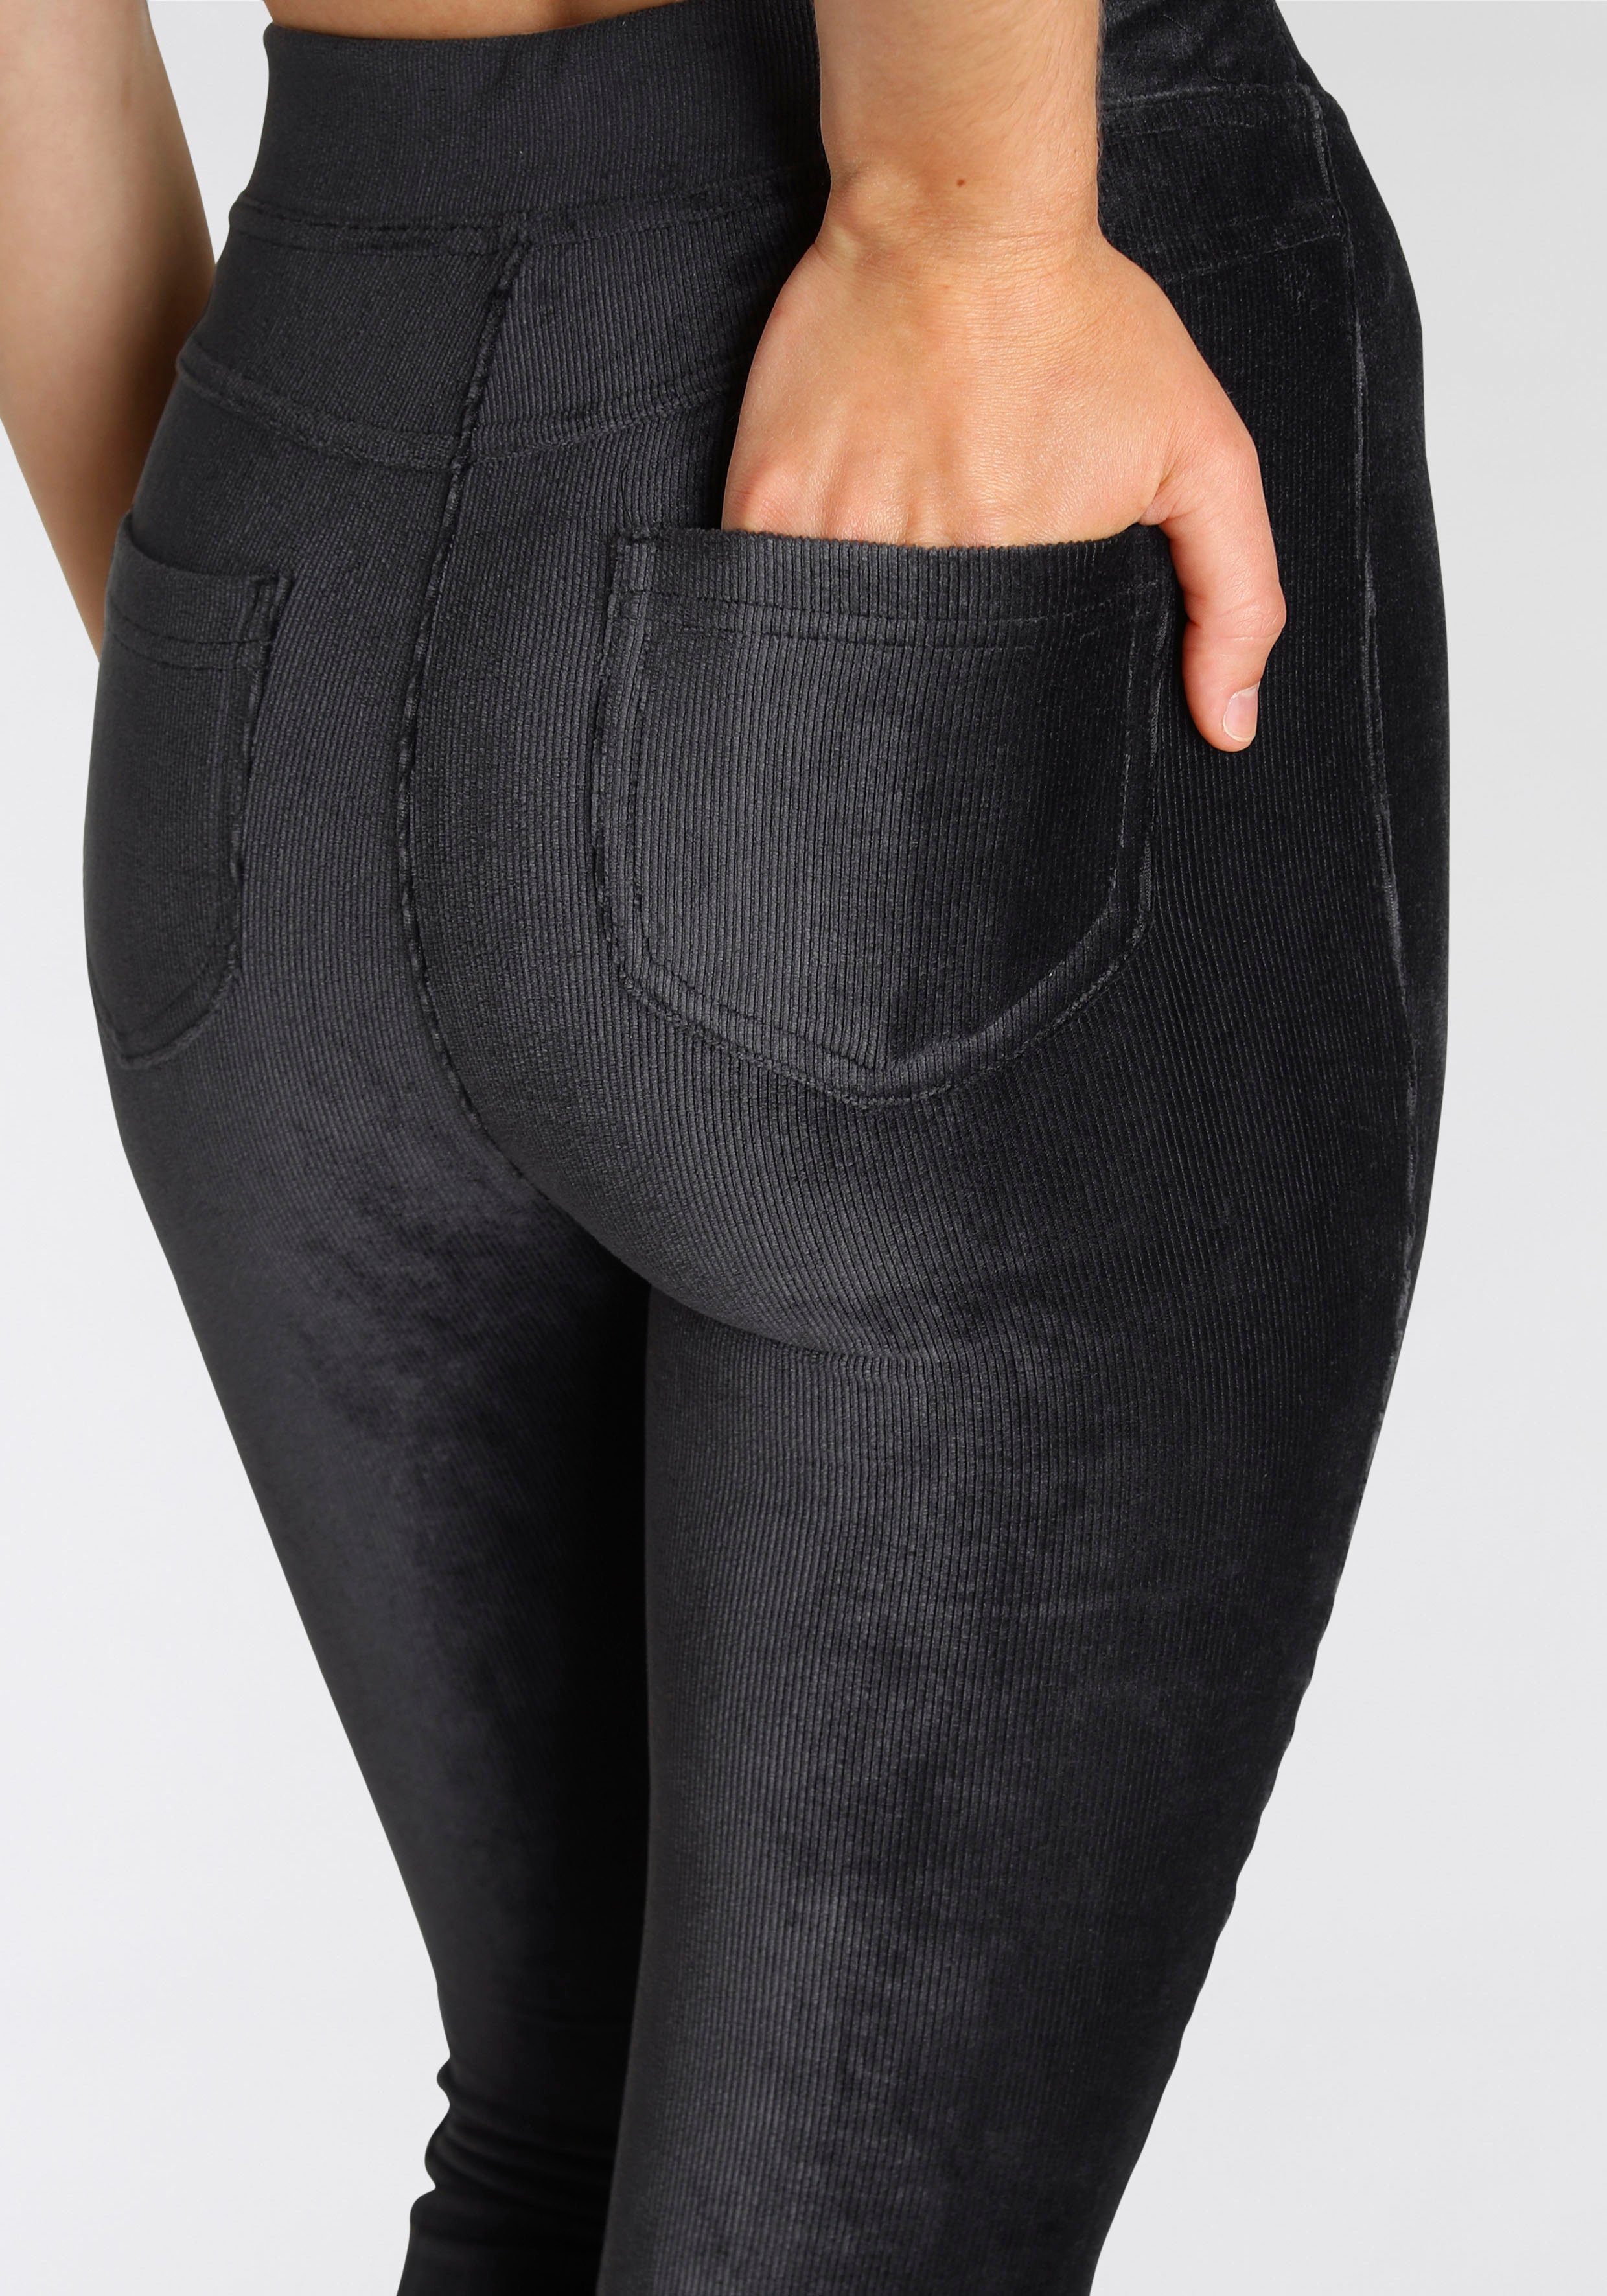 aus Material Loungewear Cord-Optik, Jazzpants in weichem schwarz LASCANA